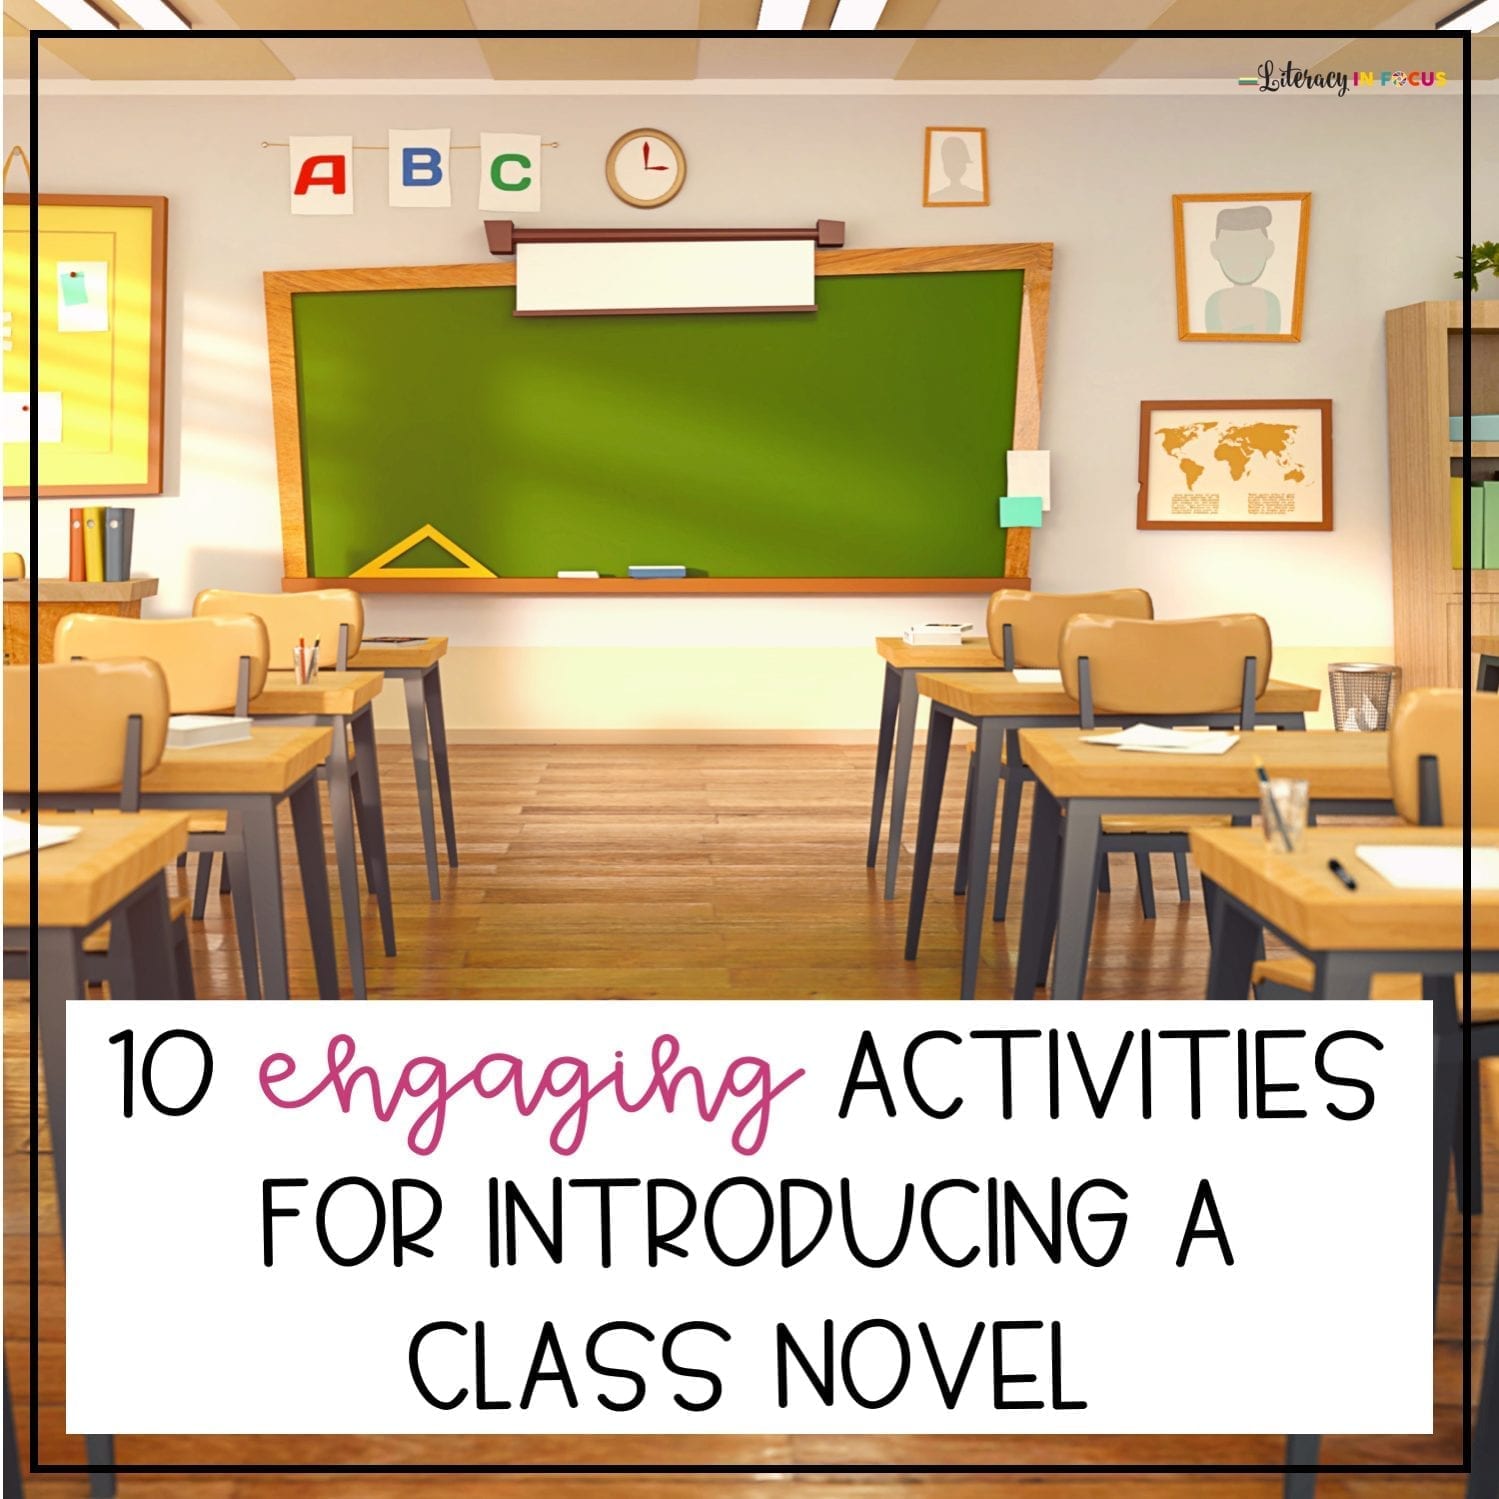 Activities for Introducing a Class Novel